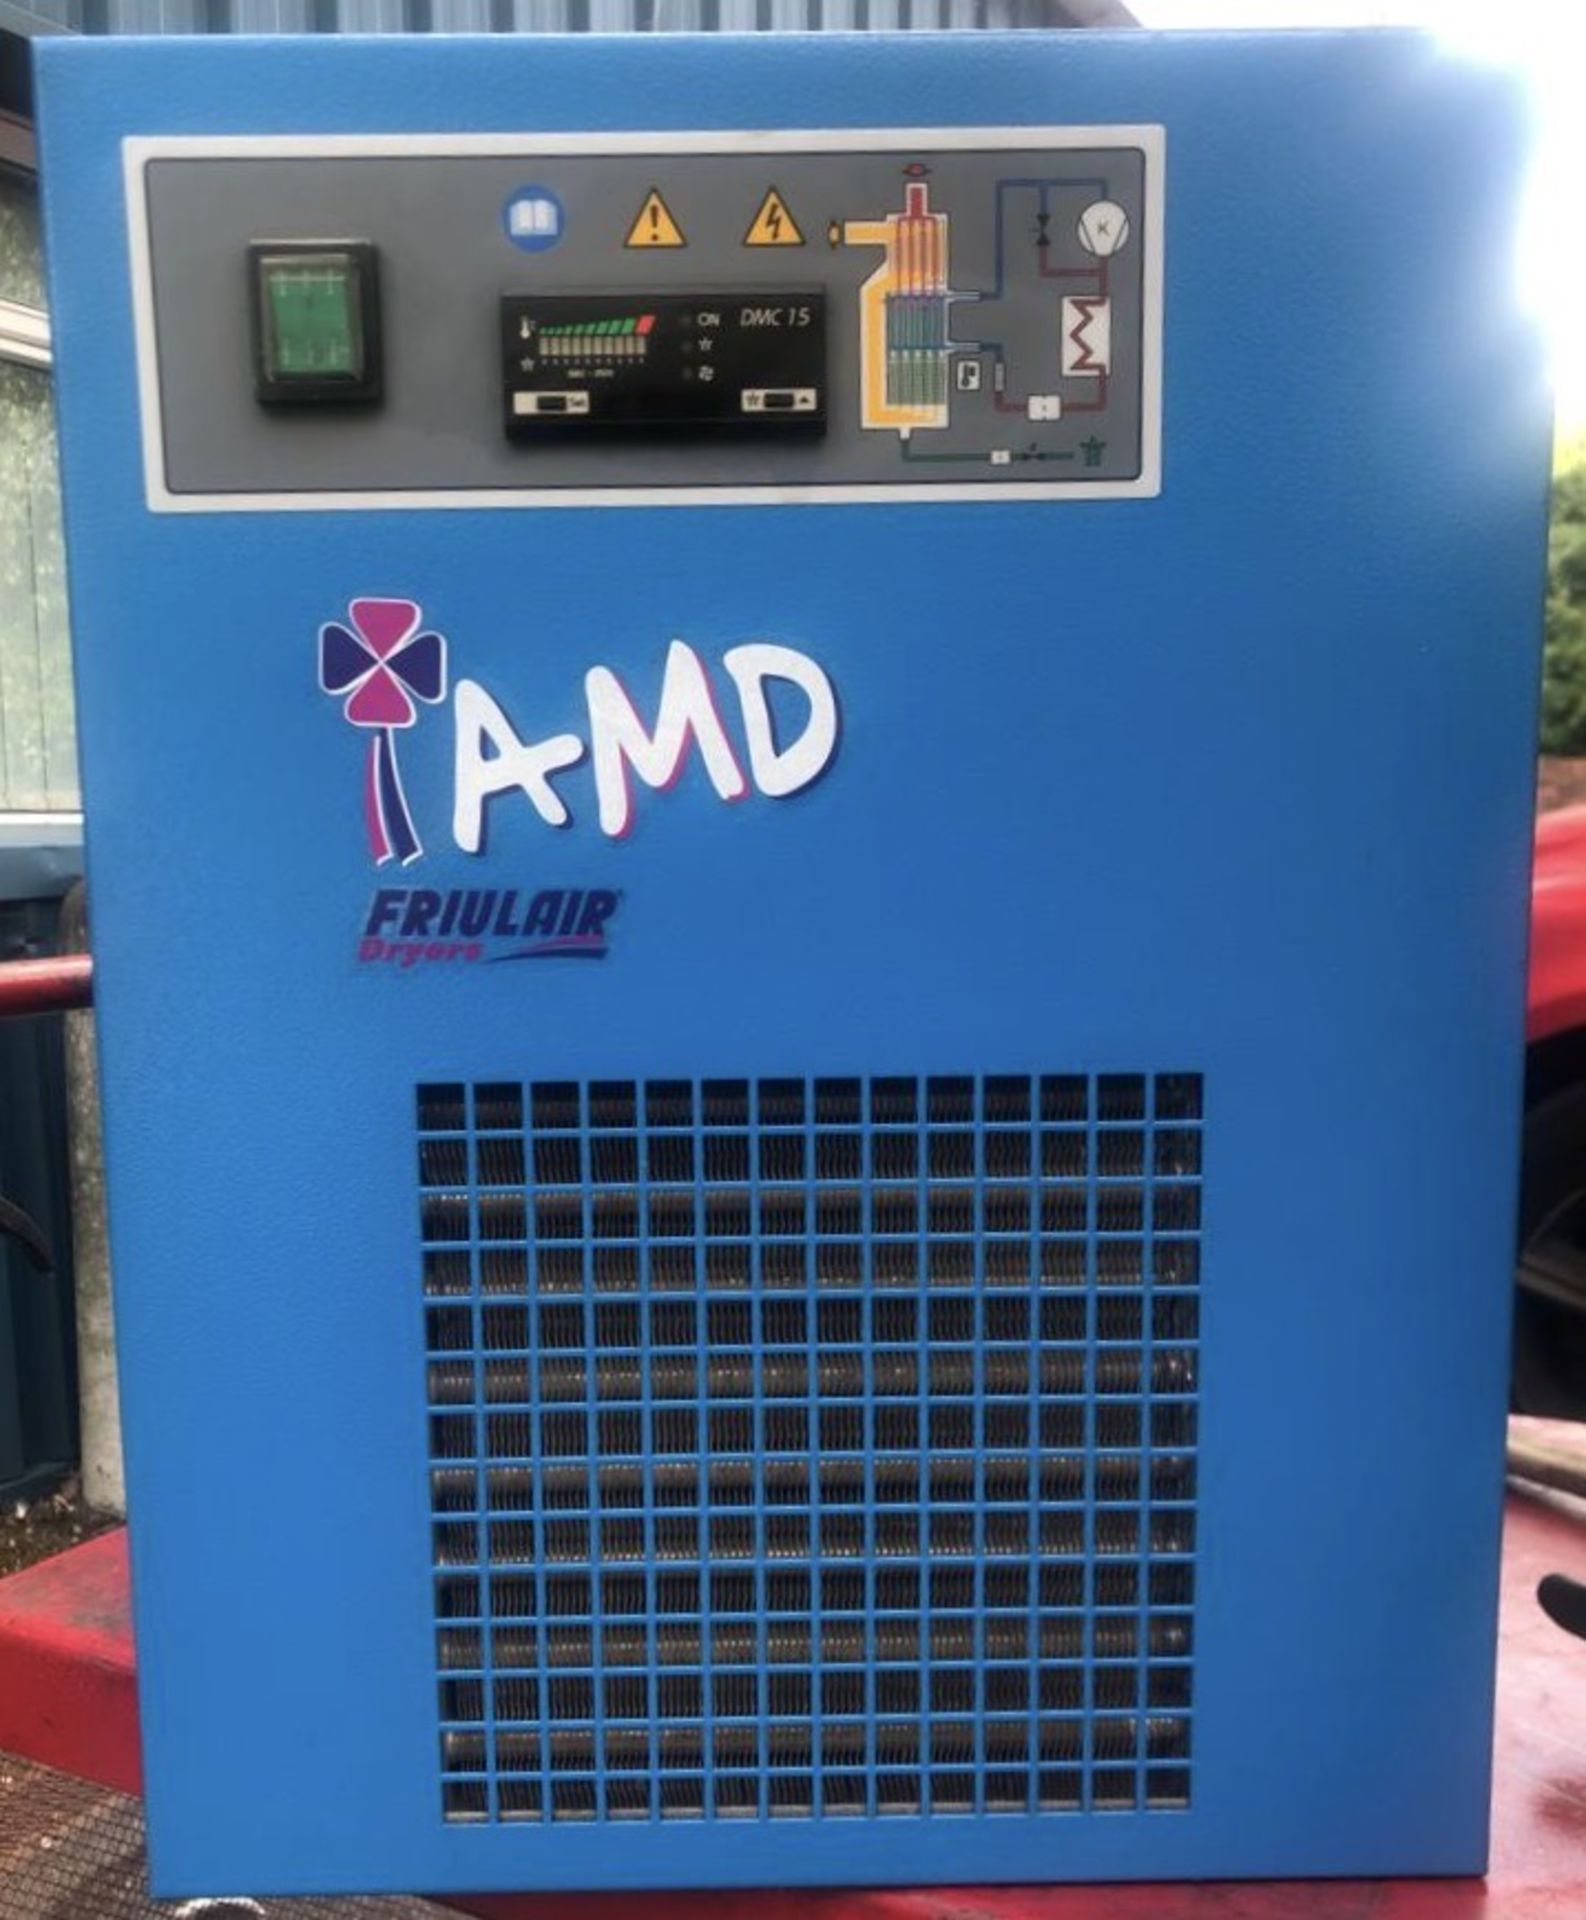 Fruilair AMD9/AC Compressed Air Dryer, 230volts, serial number 100010312